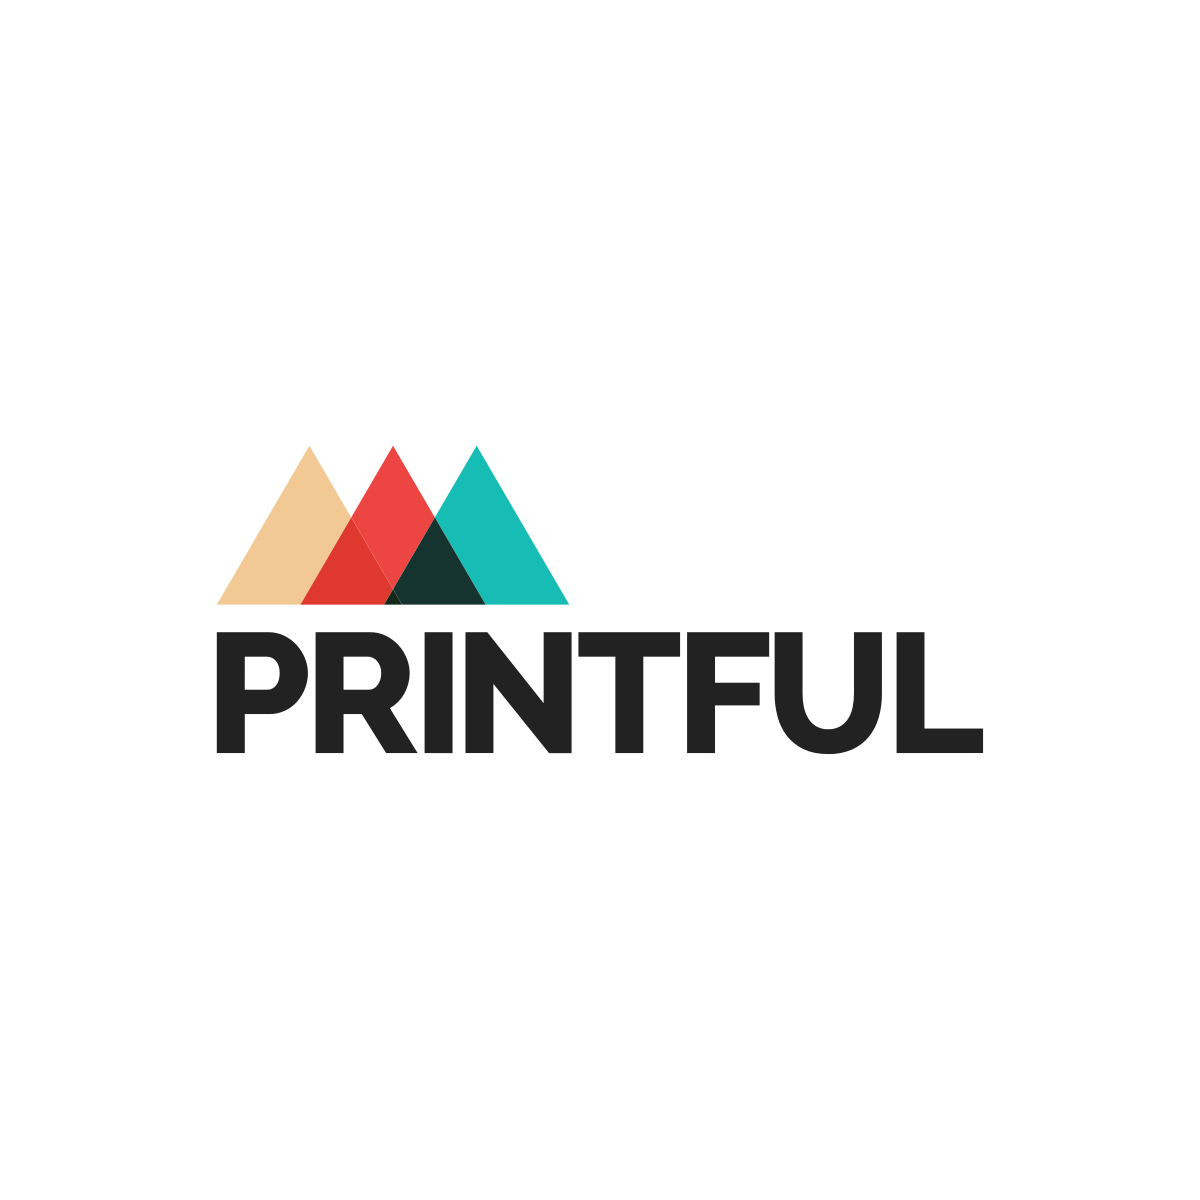 Printful Products